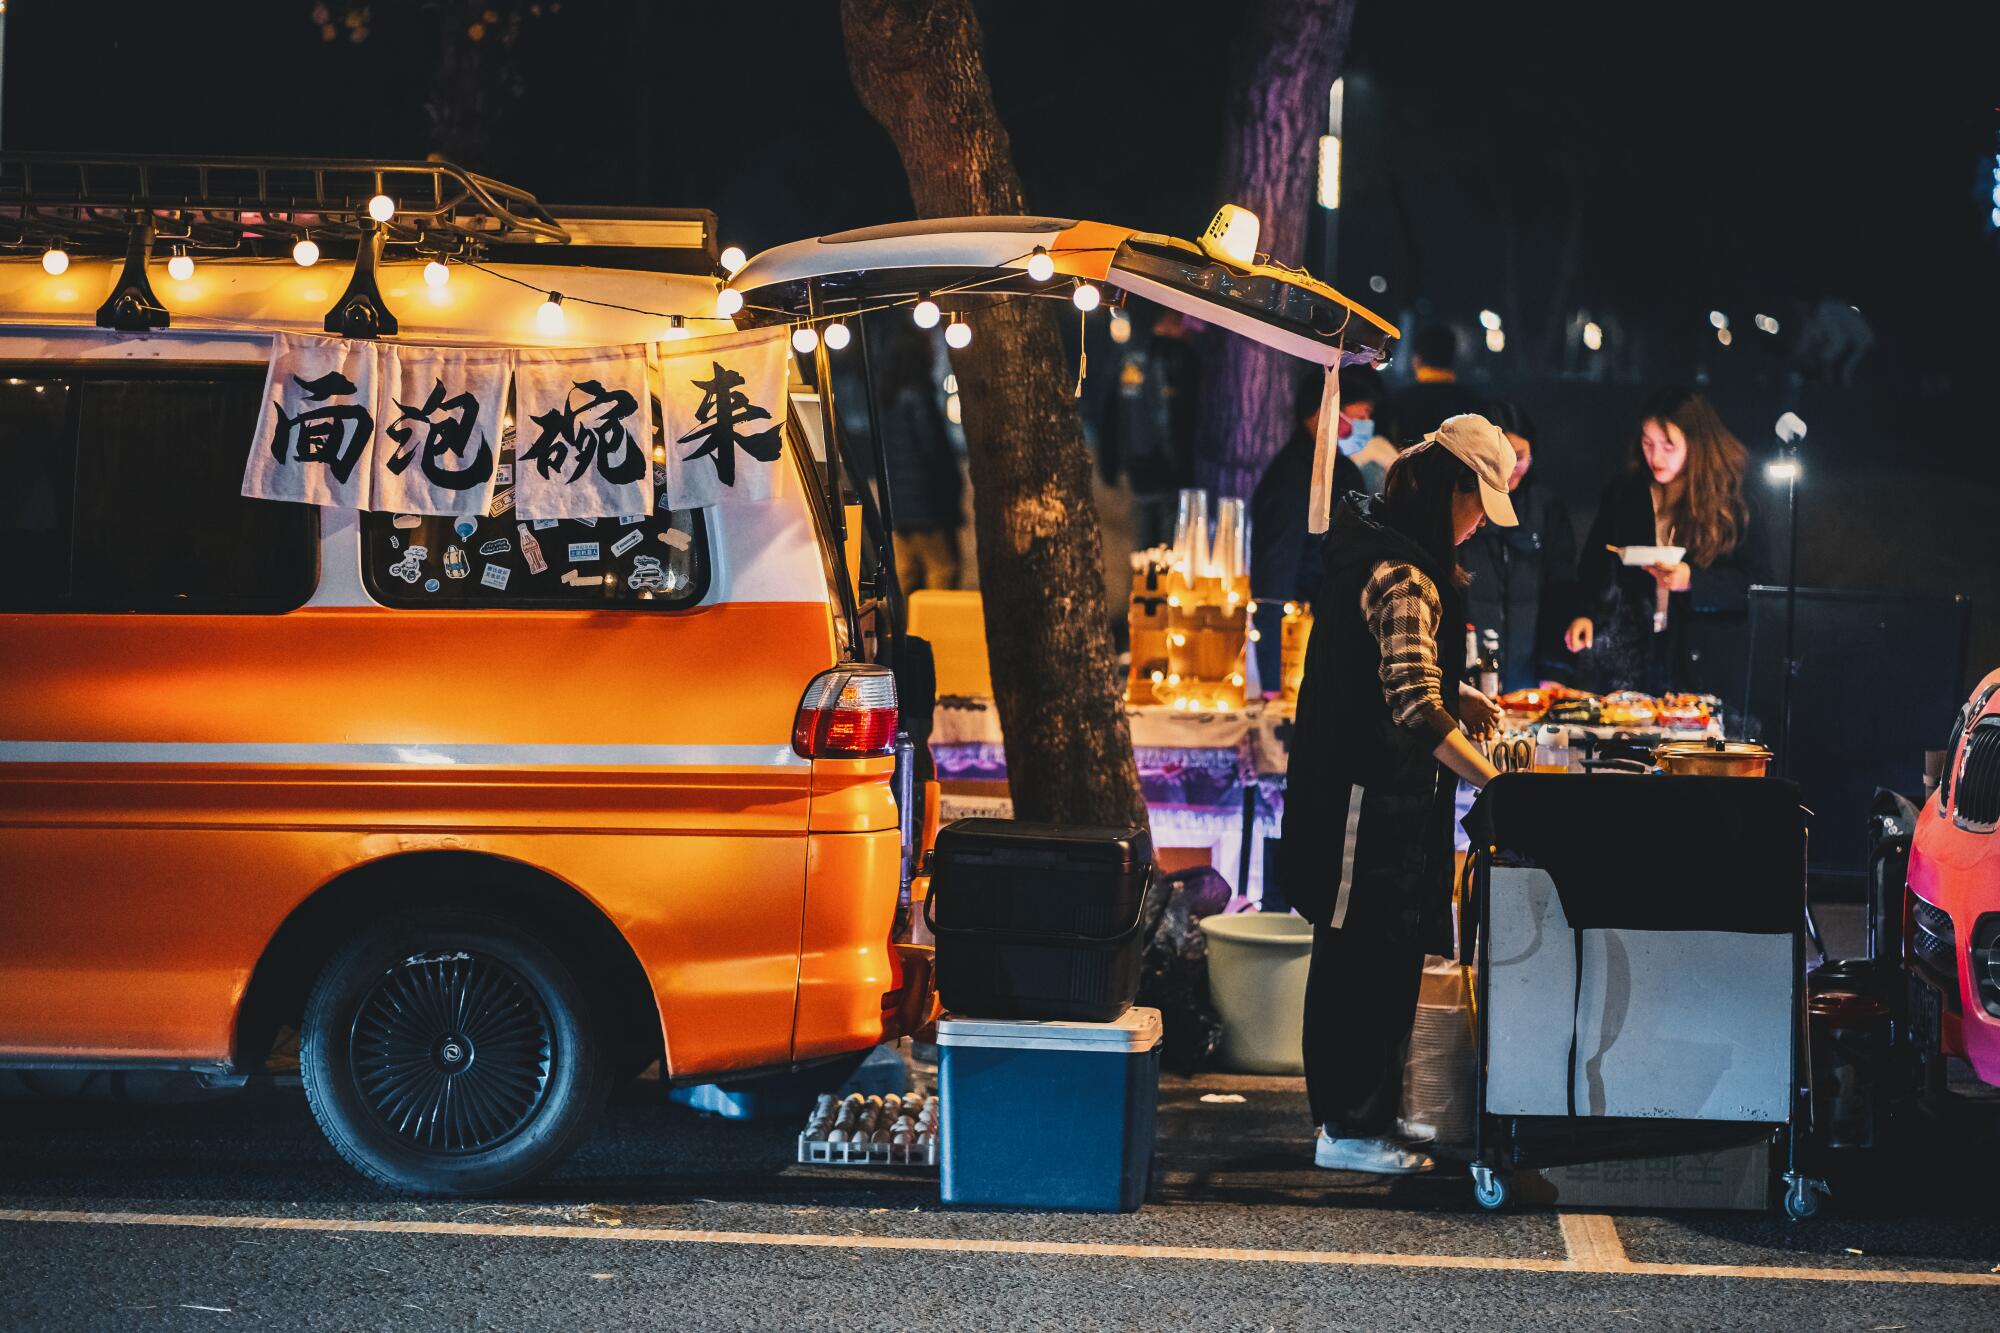 Street vendors selling food in Chengdu, China